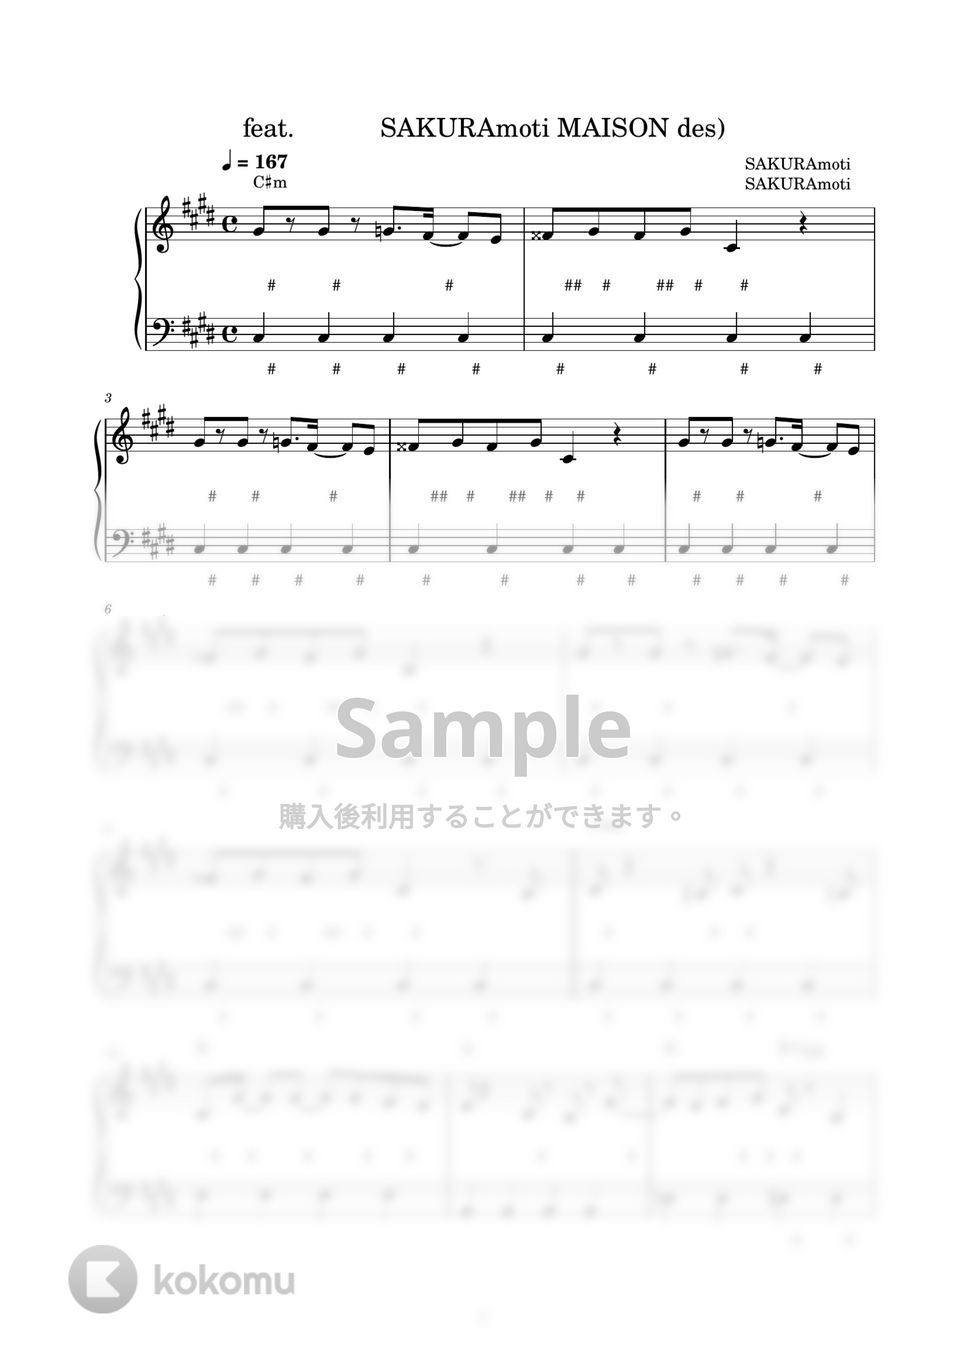 MAISONdes - アイウエ feat. 美波, SAKURAmoti (ピアノ楽譜 / かんたん両手 / 歌詞付き / ドレミ付き / 初心者向き) by piano.tokyo